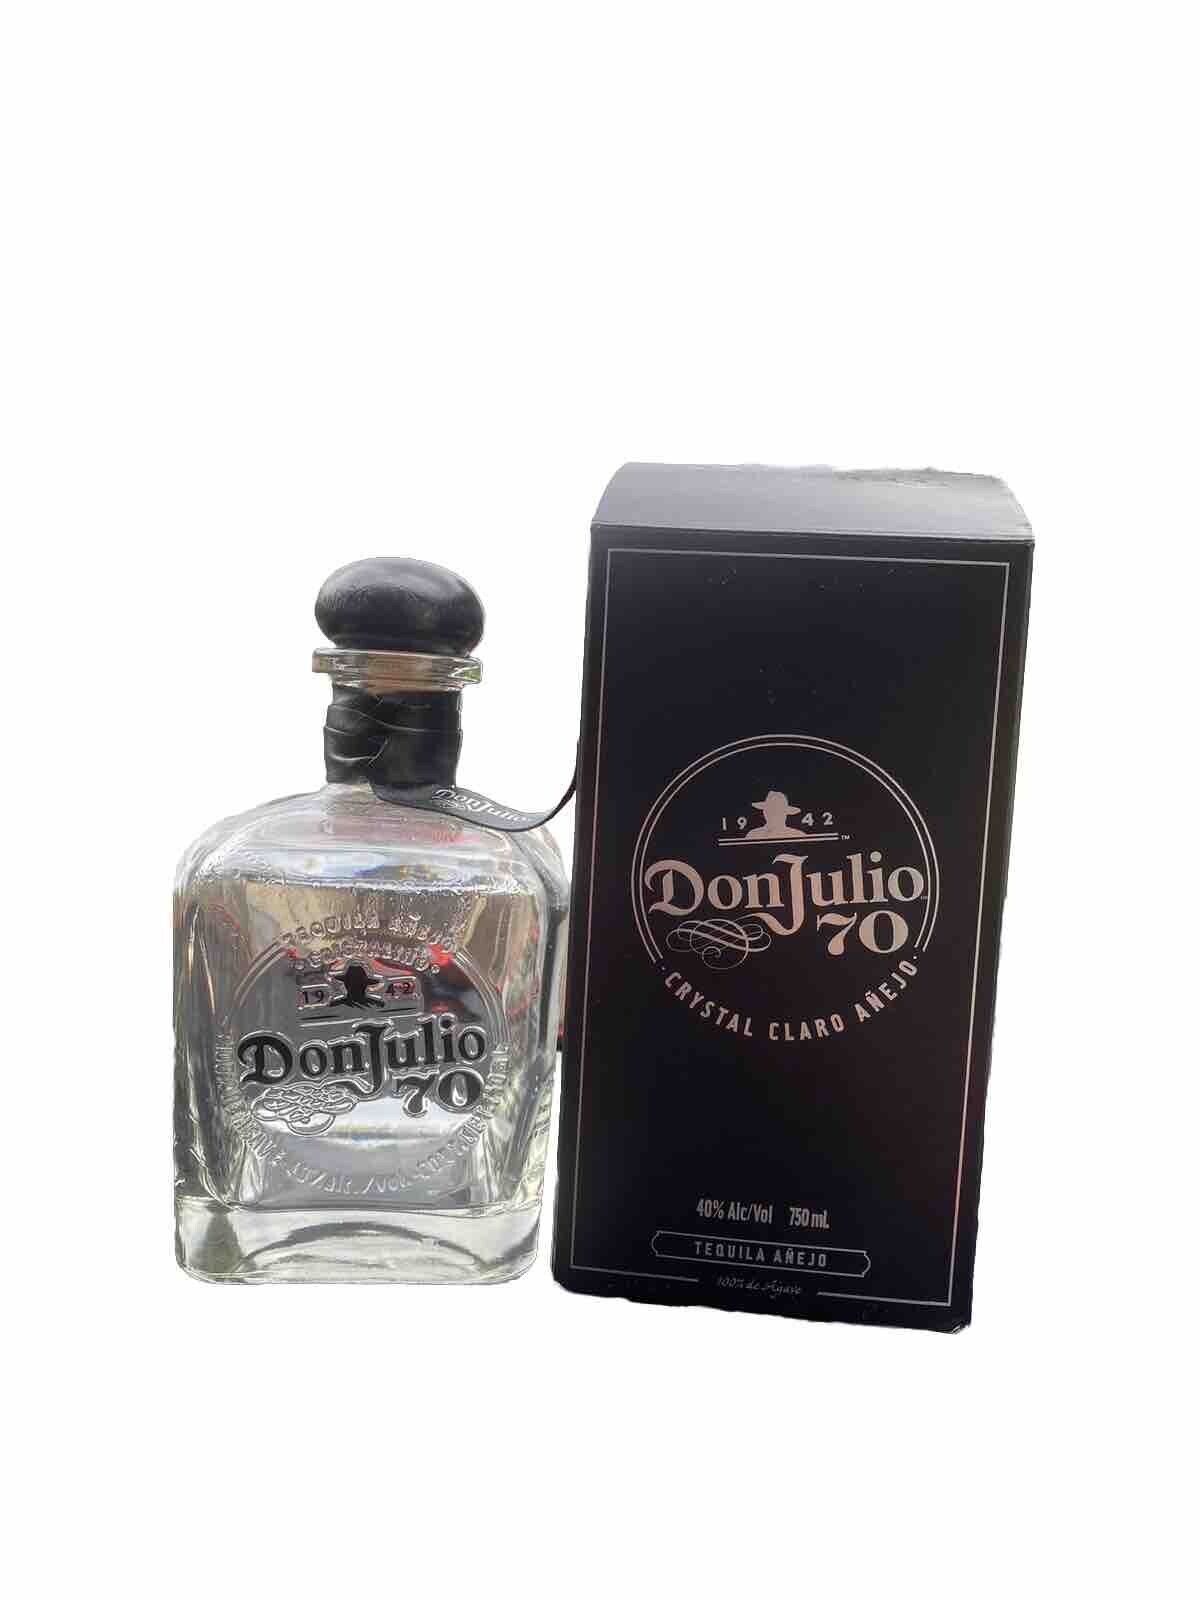 Don Julio 70 EMPTY Bottle With Box 750ml